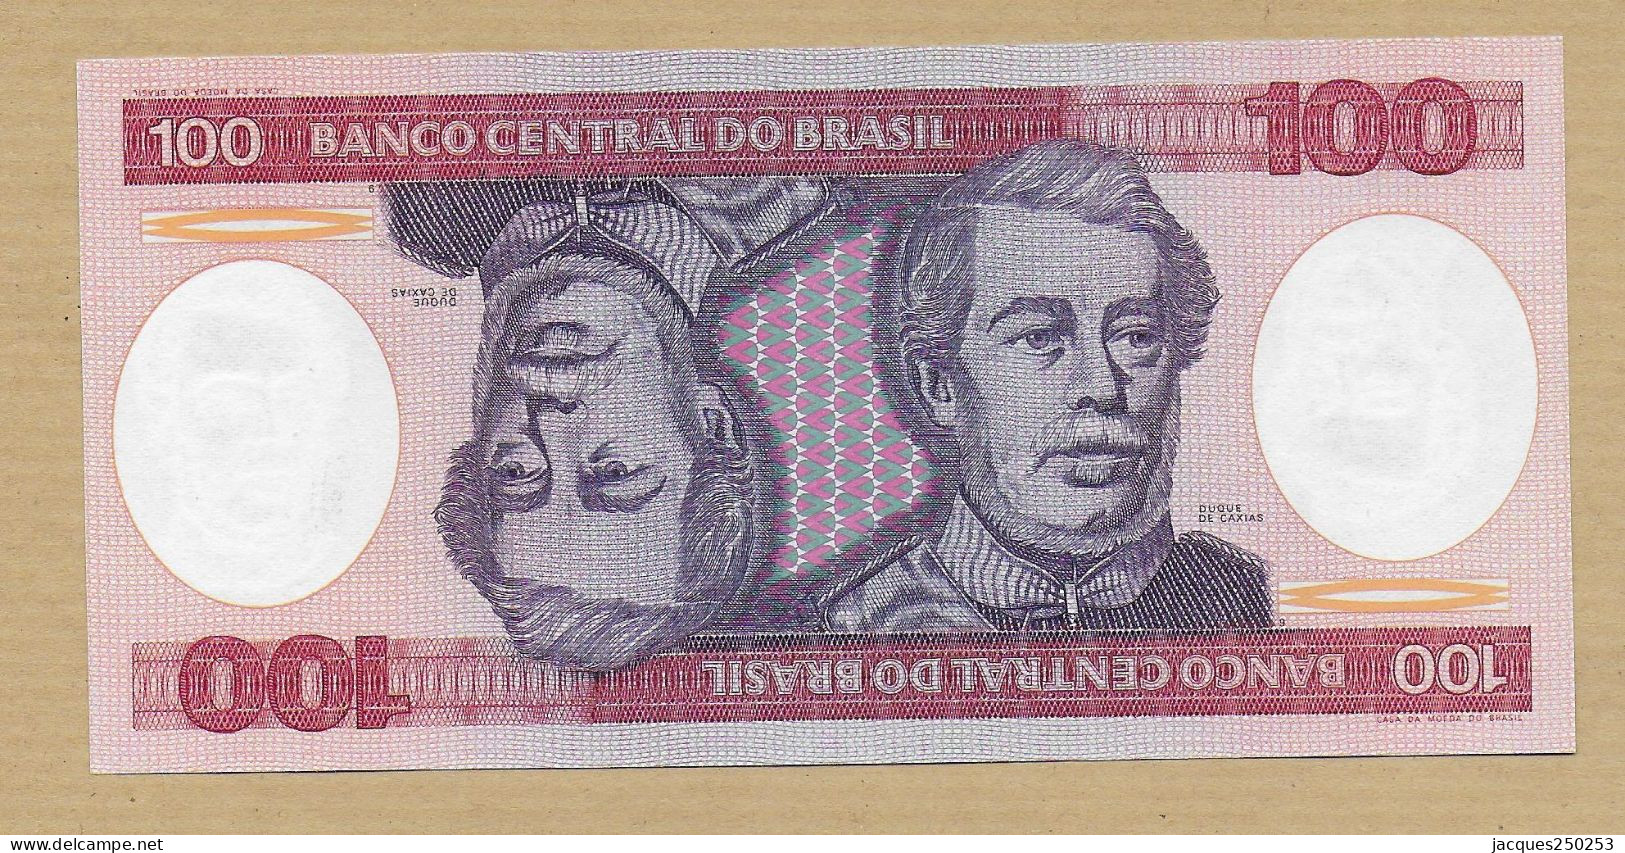 100 CRUZEIROS 1981 Et 1984 NEUF (voir N° DE SERIE ) - Brasil